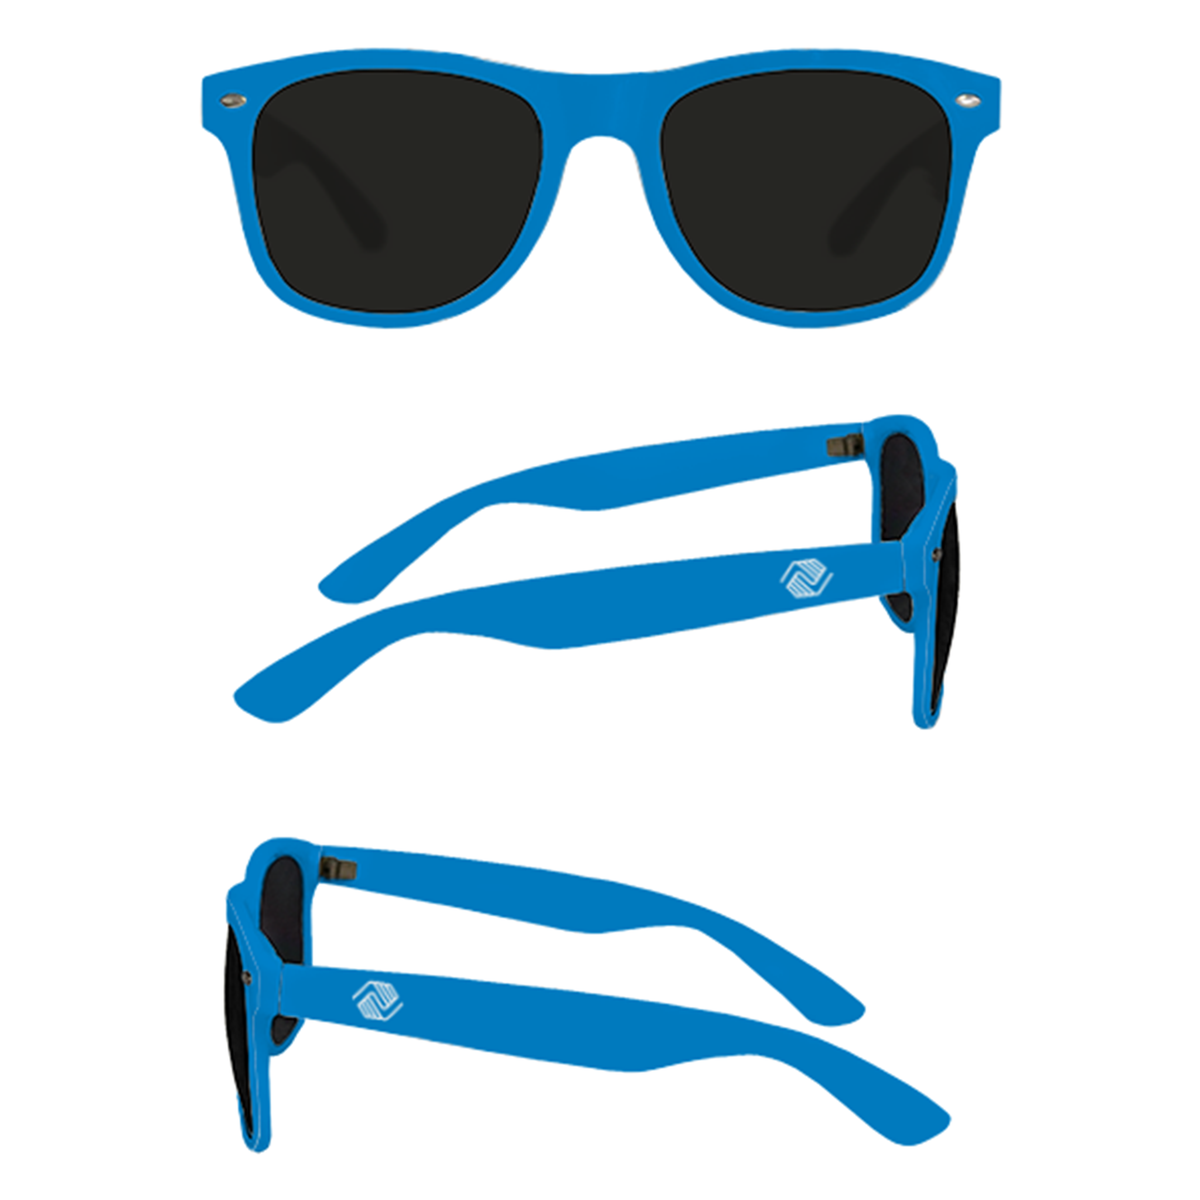 Malibu Sunglasses - Process Blue